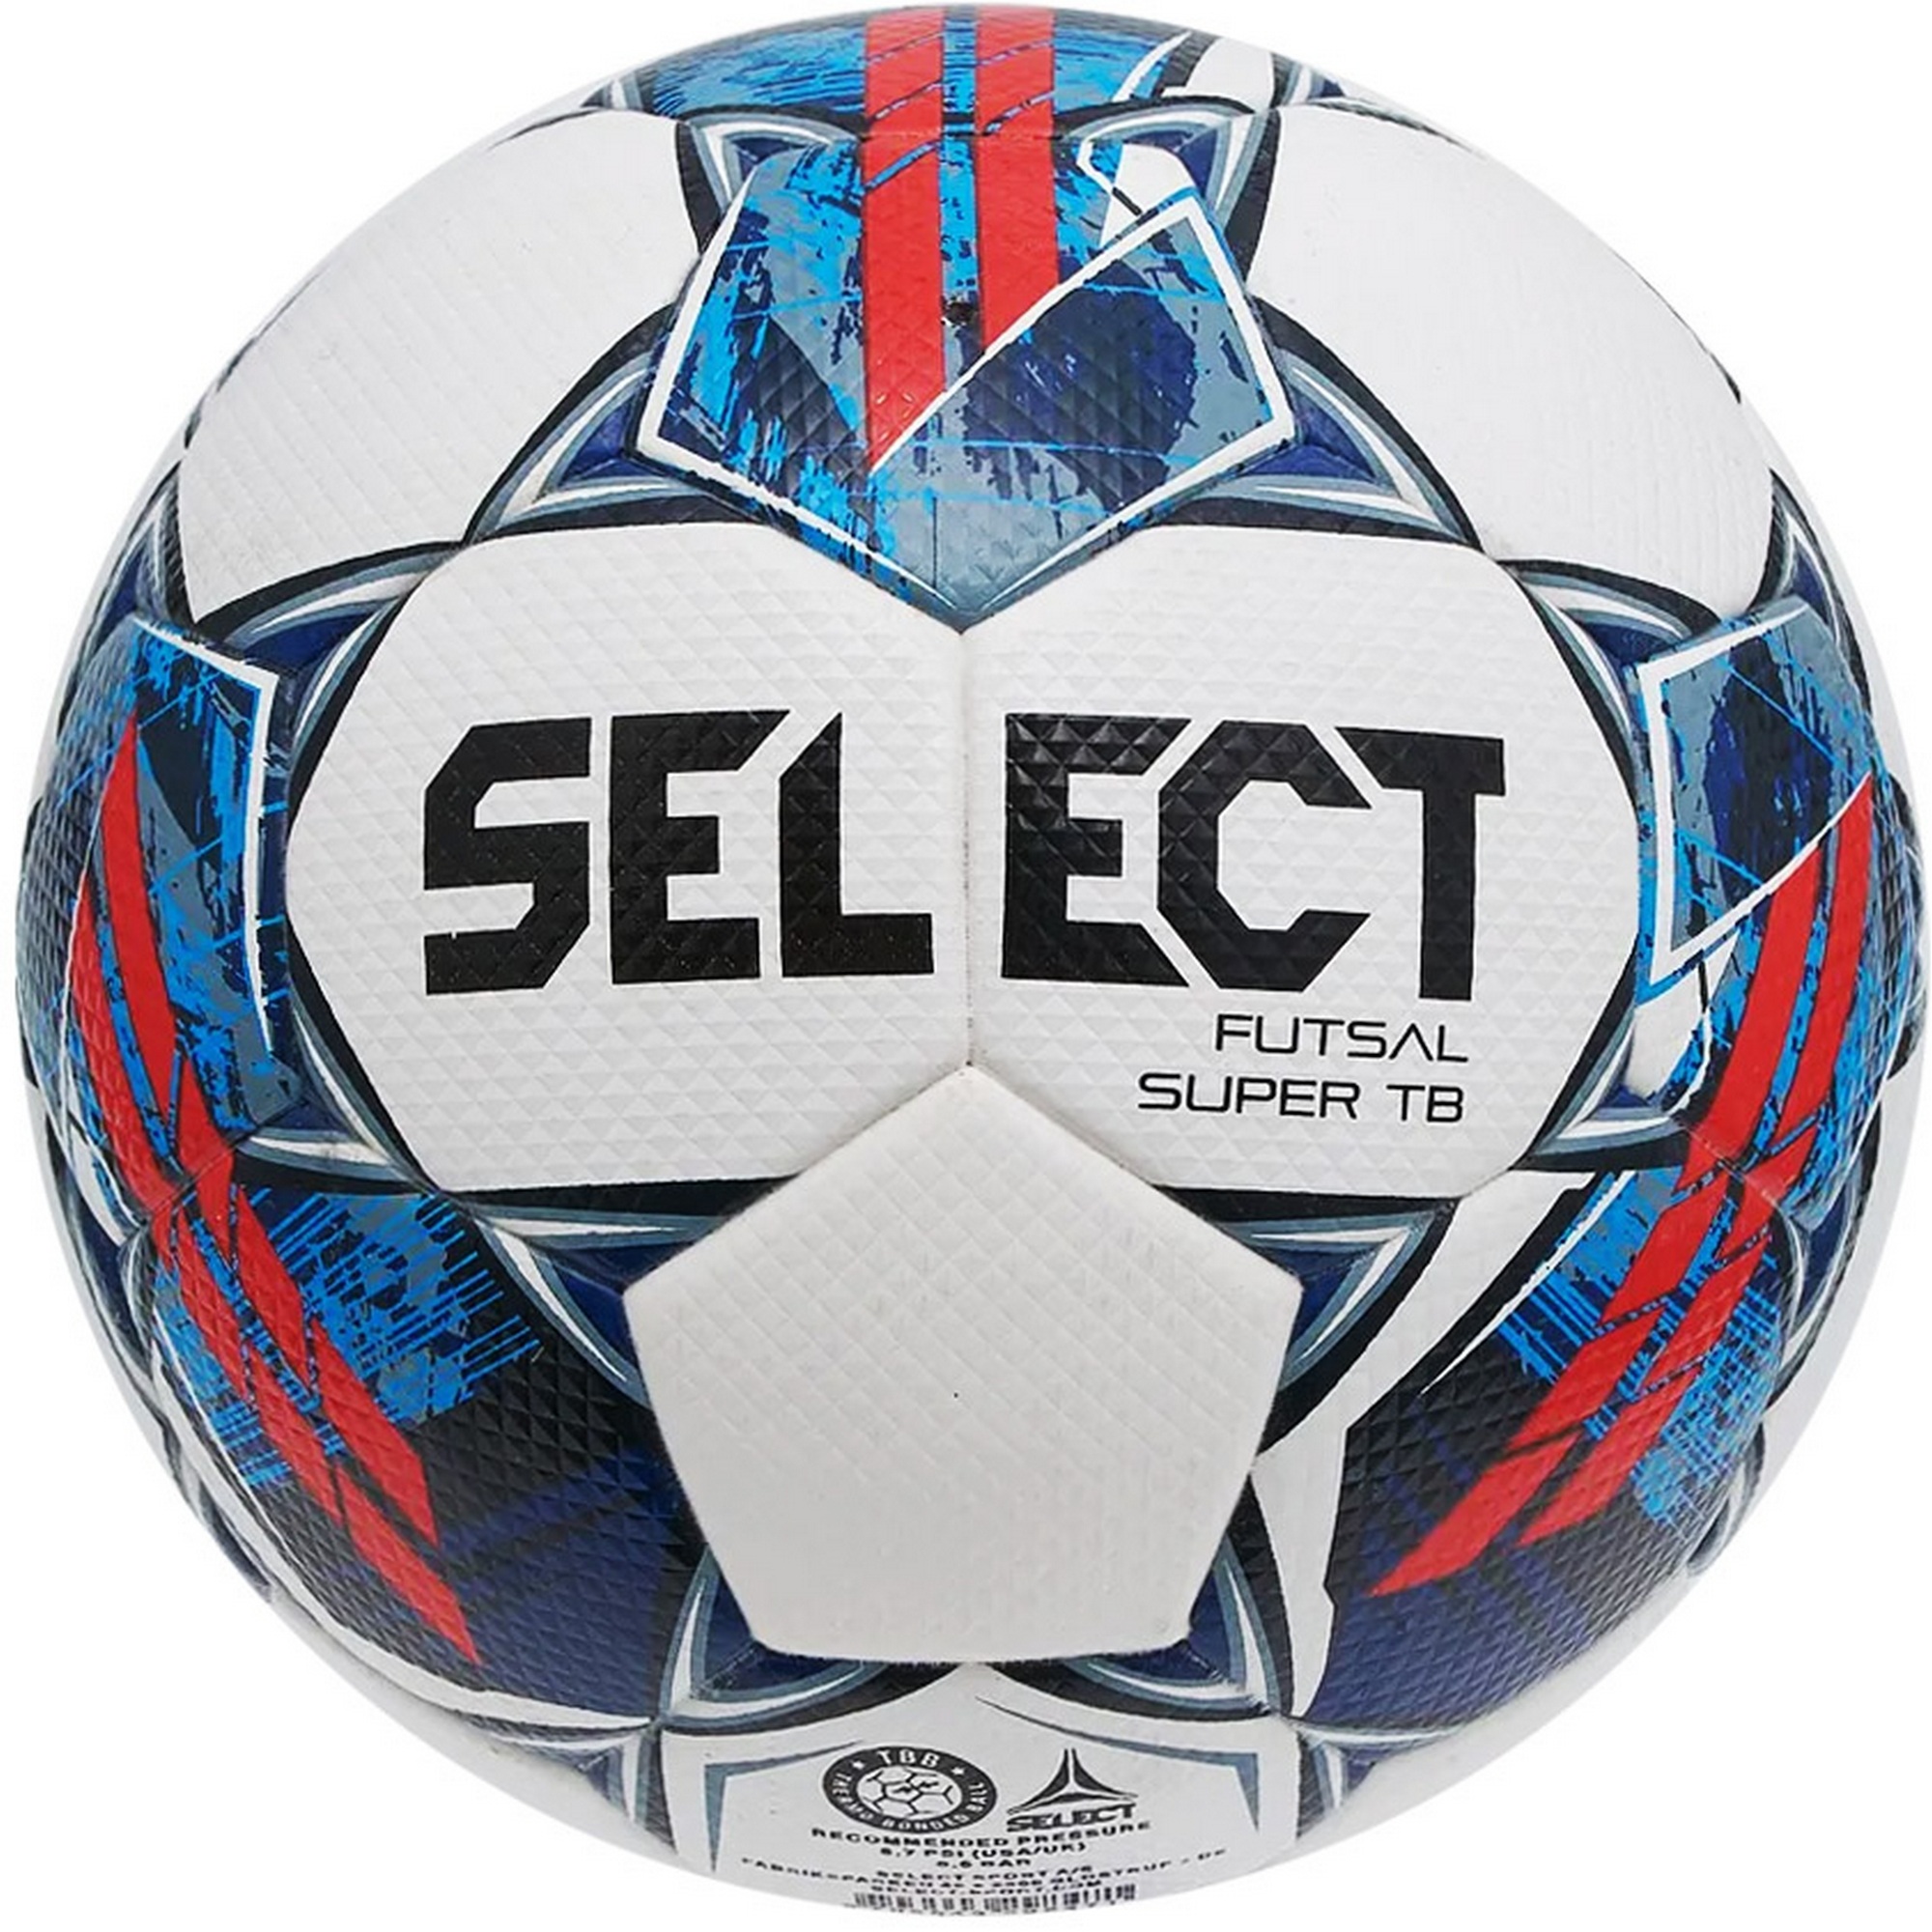   Select Futsal Super TB, FIFA Pro 3613460003 .4